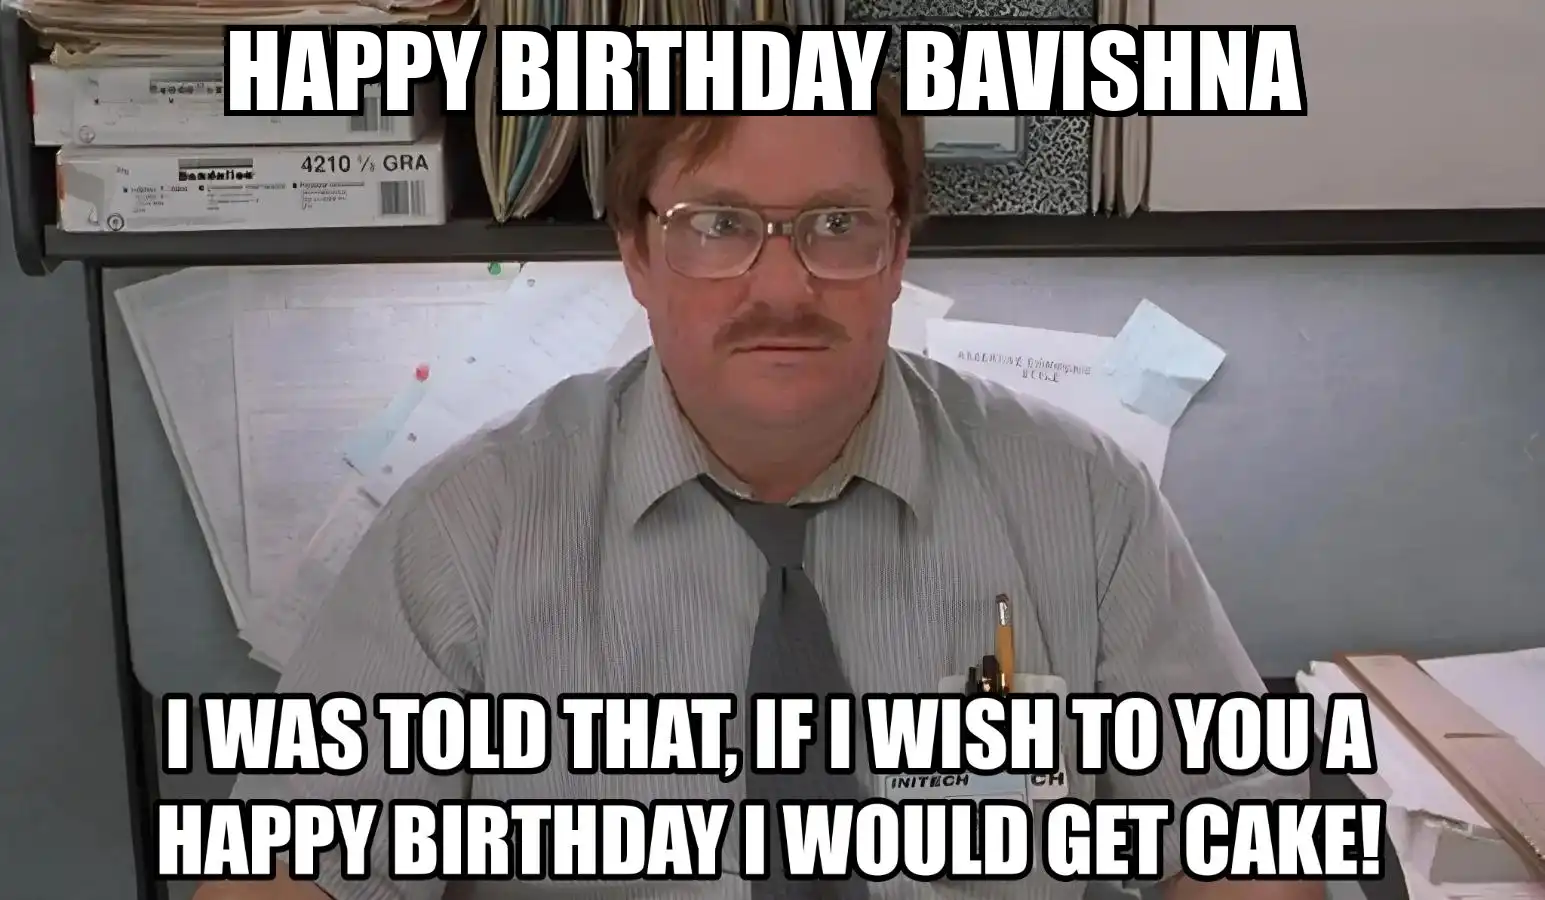 Happy Birthday Bavishna I Would Get A Cake Meme